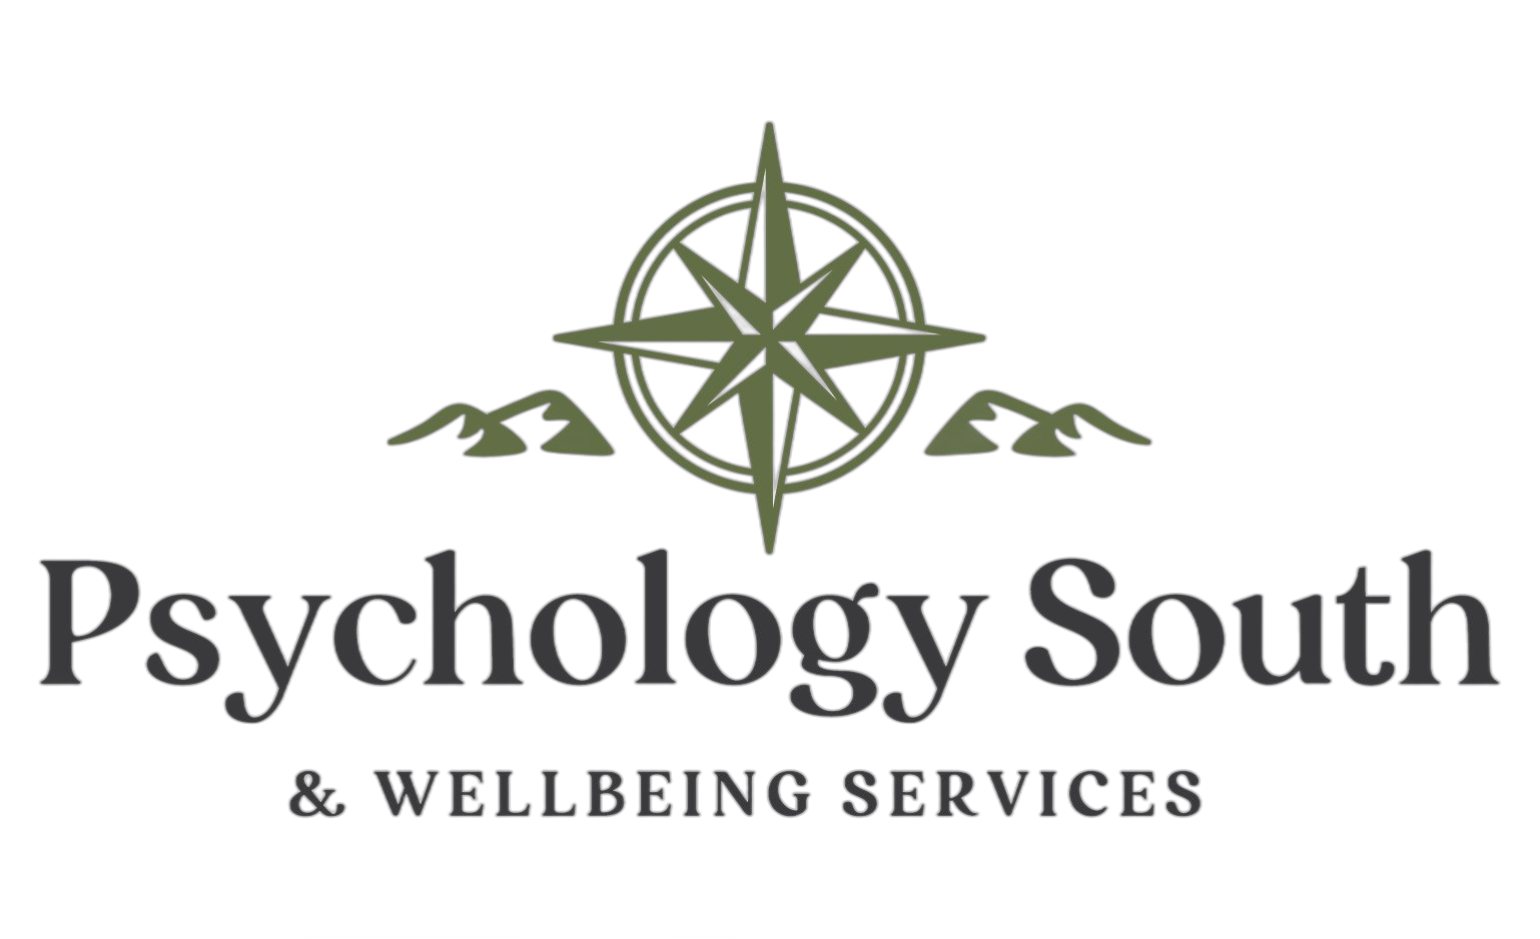 PsychologySouth_Logo_Primary_FullColor_WhiteBackground-01-veed-remove-background